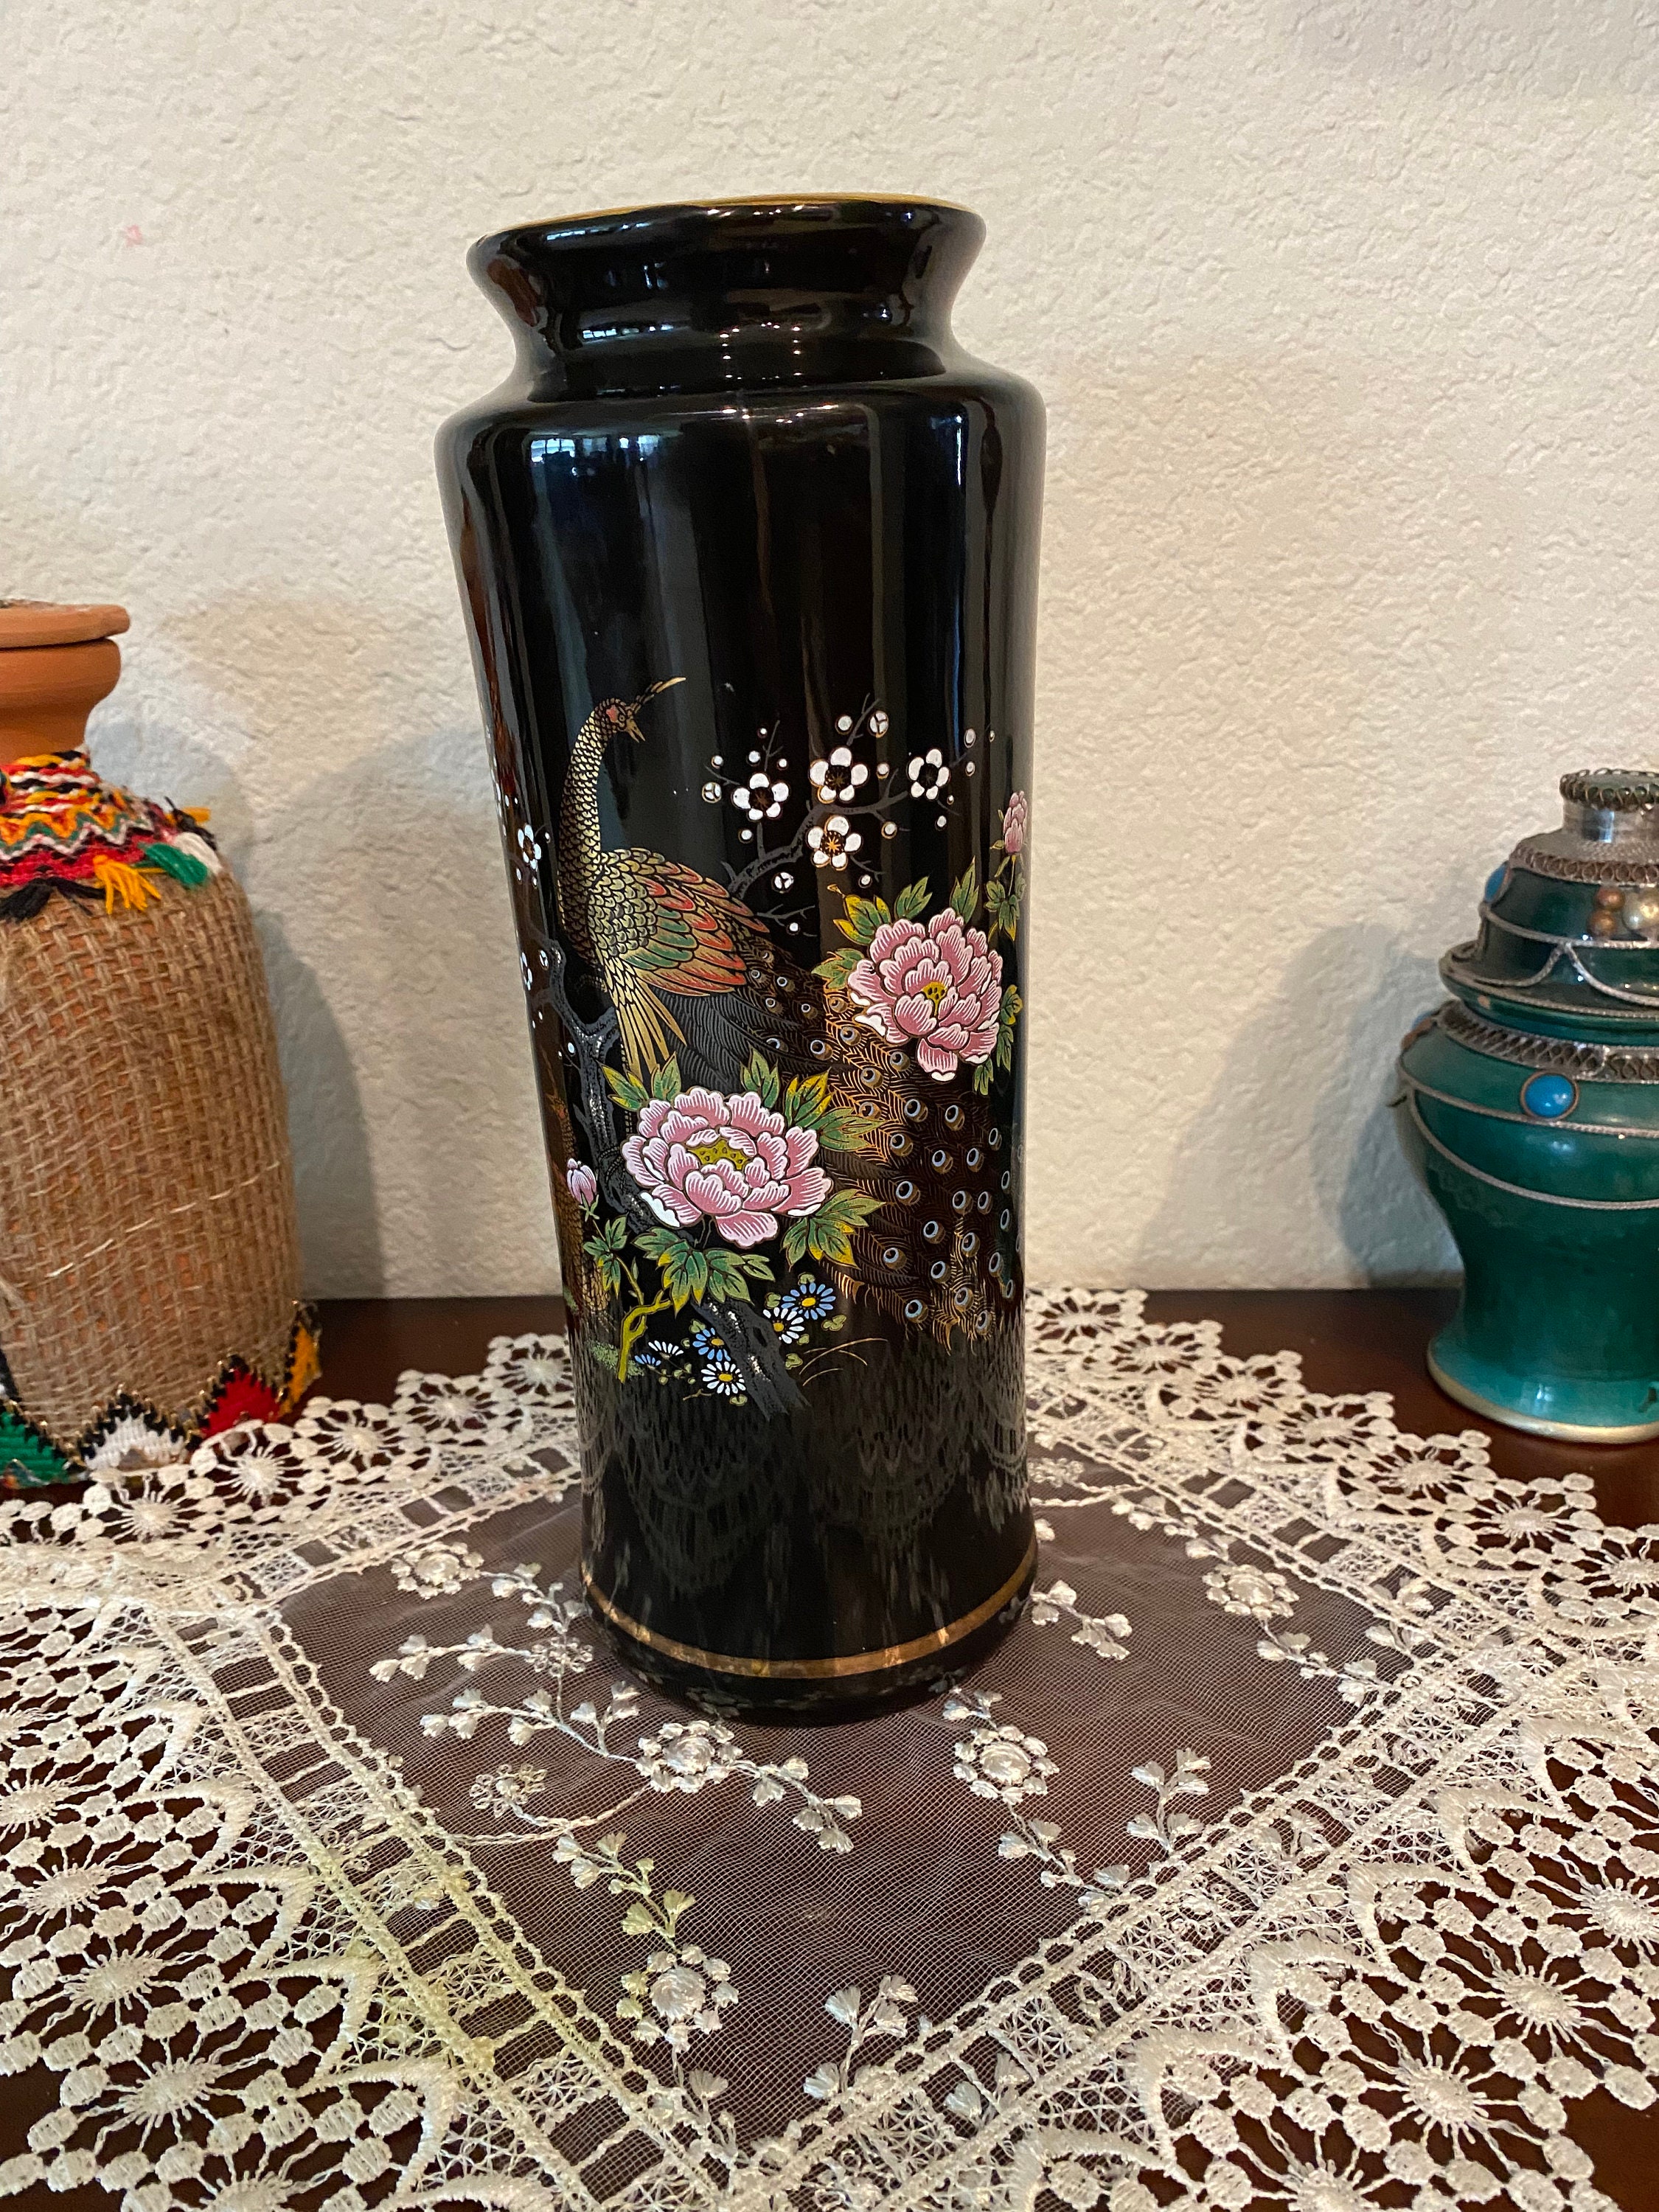 Handpainted Peacock Vase – Carolina K